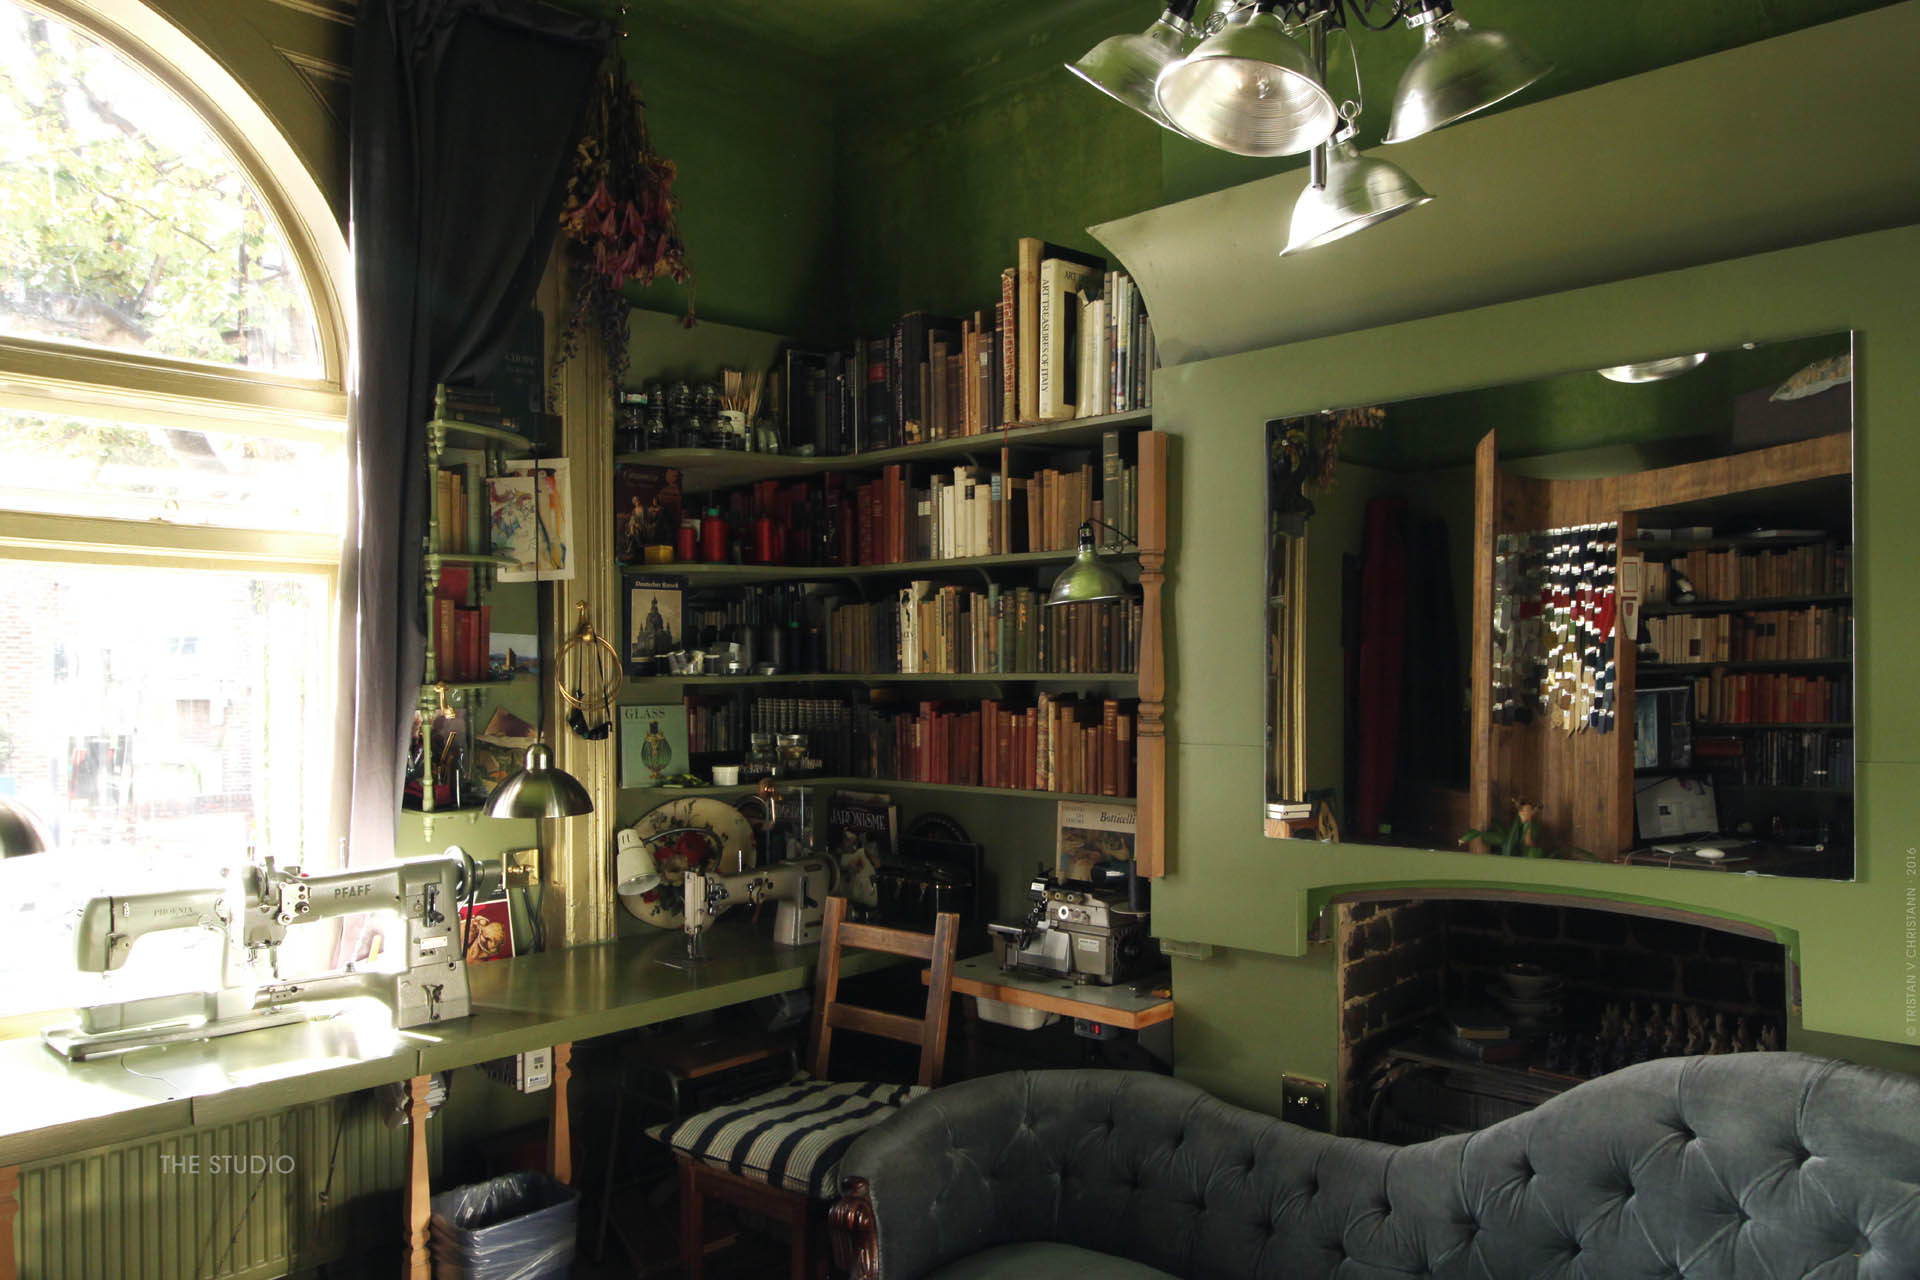 The Studio, The Green Room